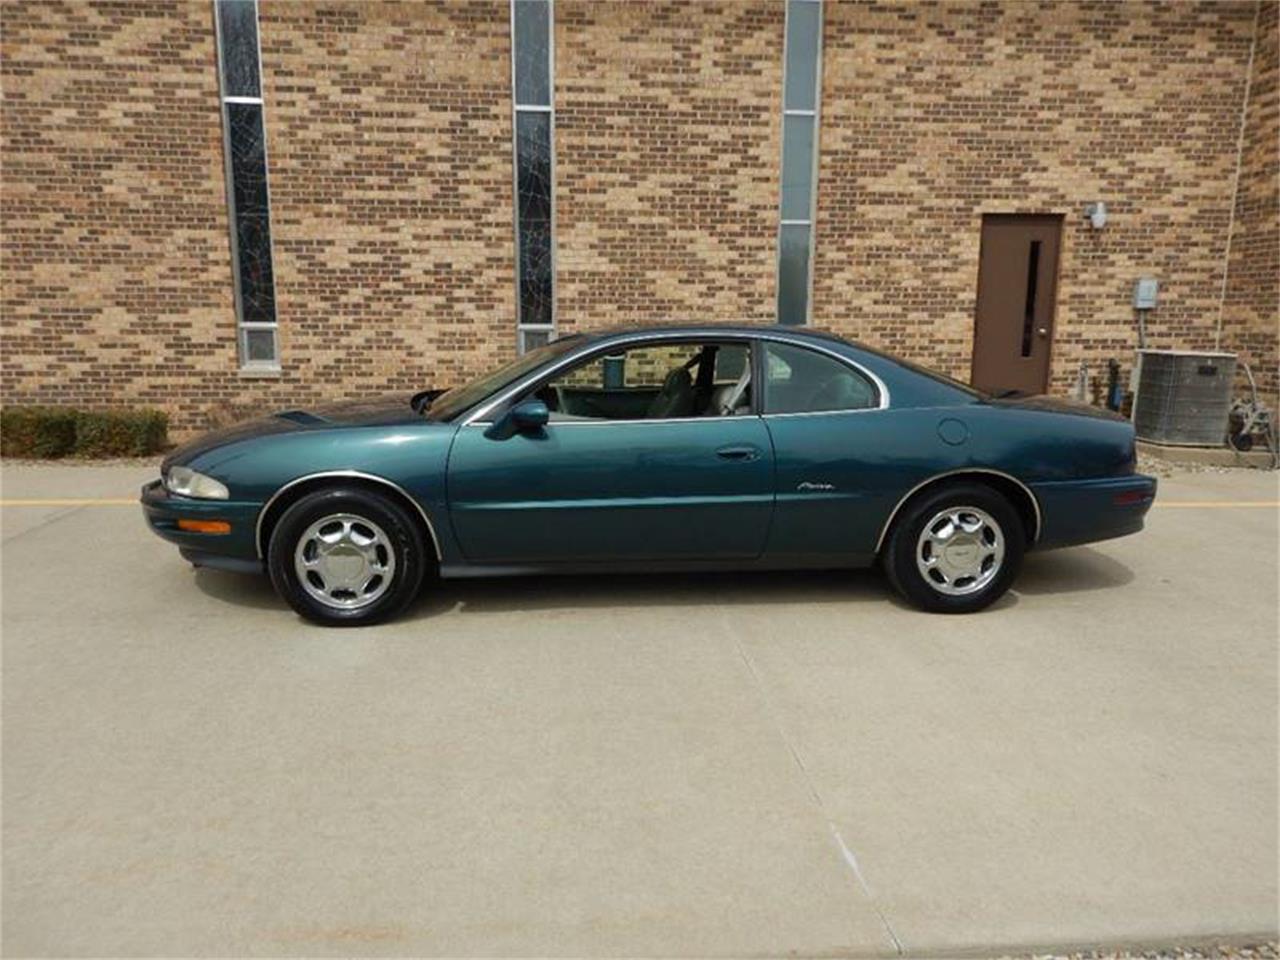 1998 Buick Riviera for Sale | ClassicCars.com | CC-1084855